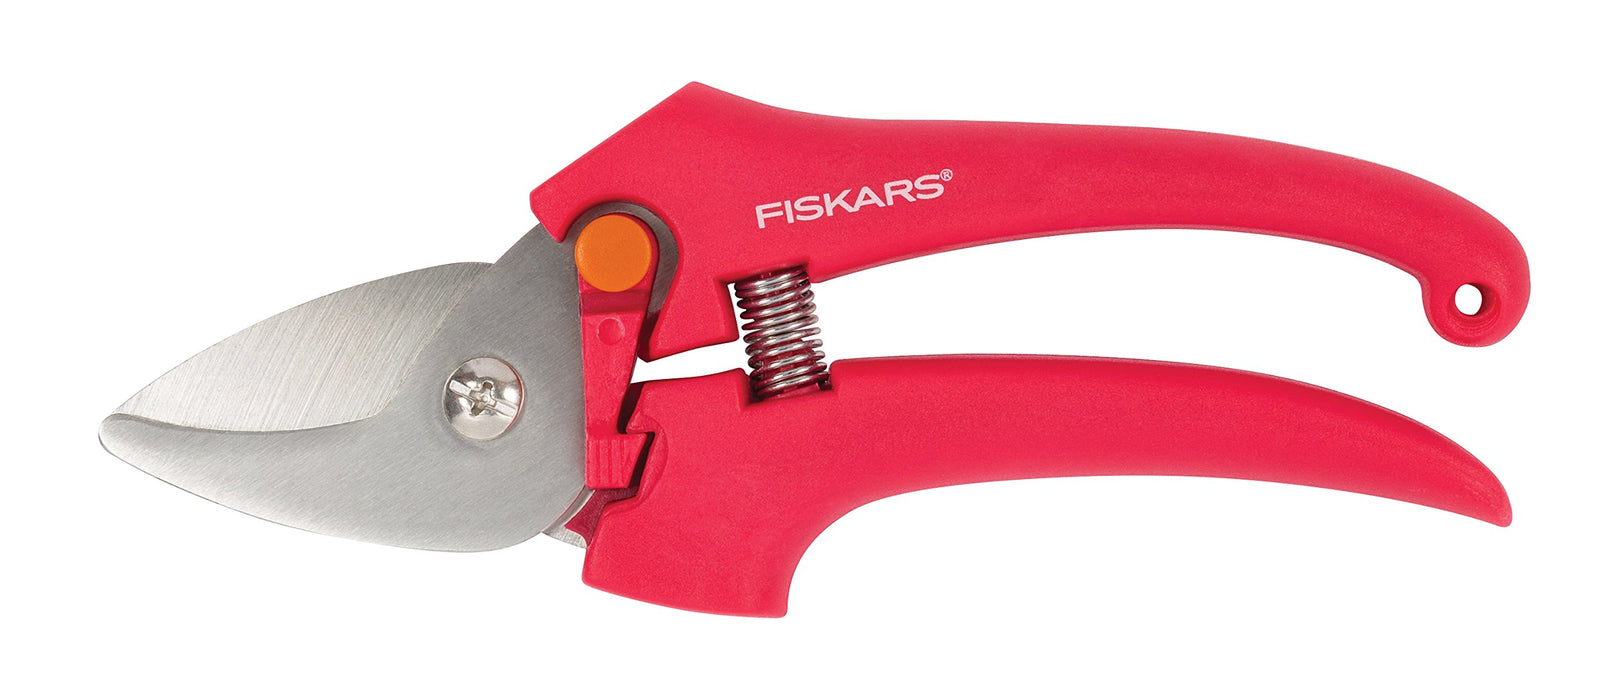 Fiskars 379200-1004 Stainless Steel Bypass Fashion Pruner, Pink